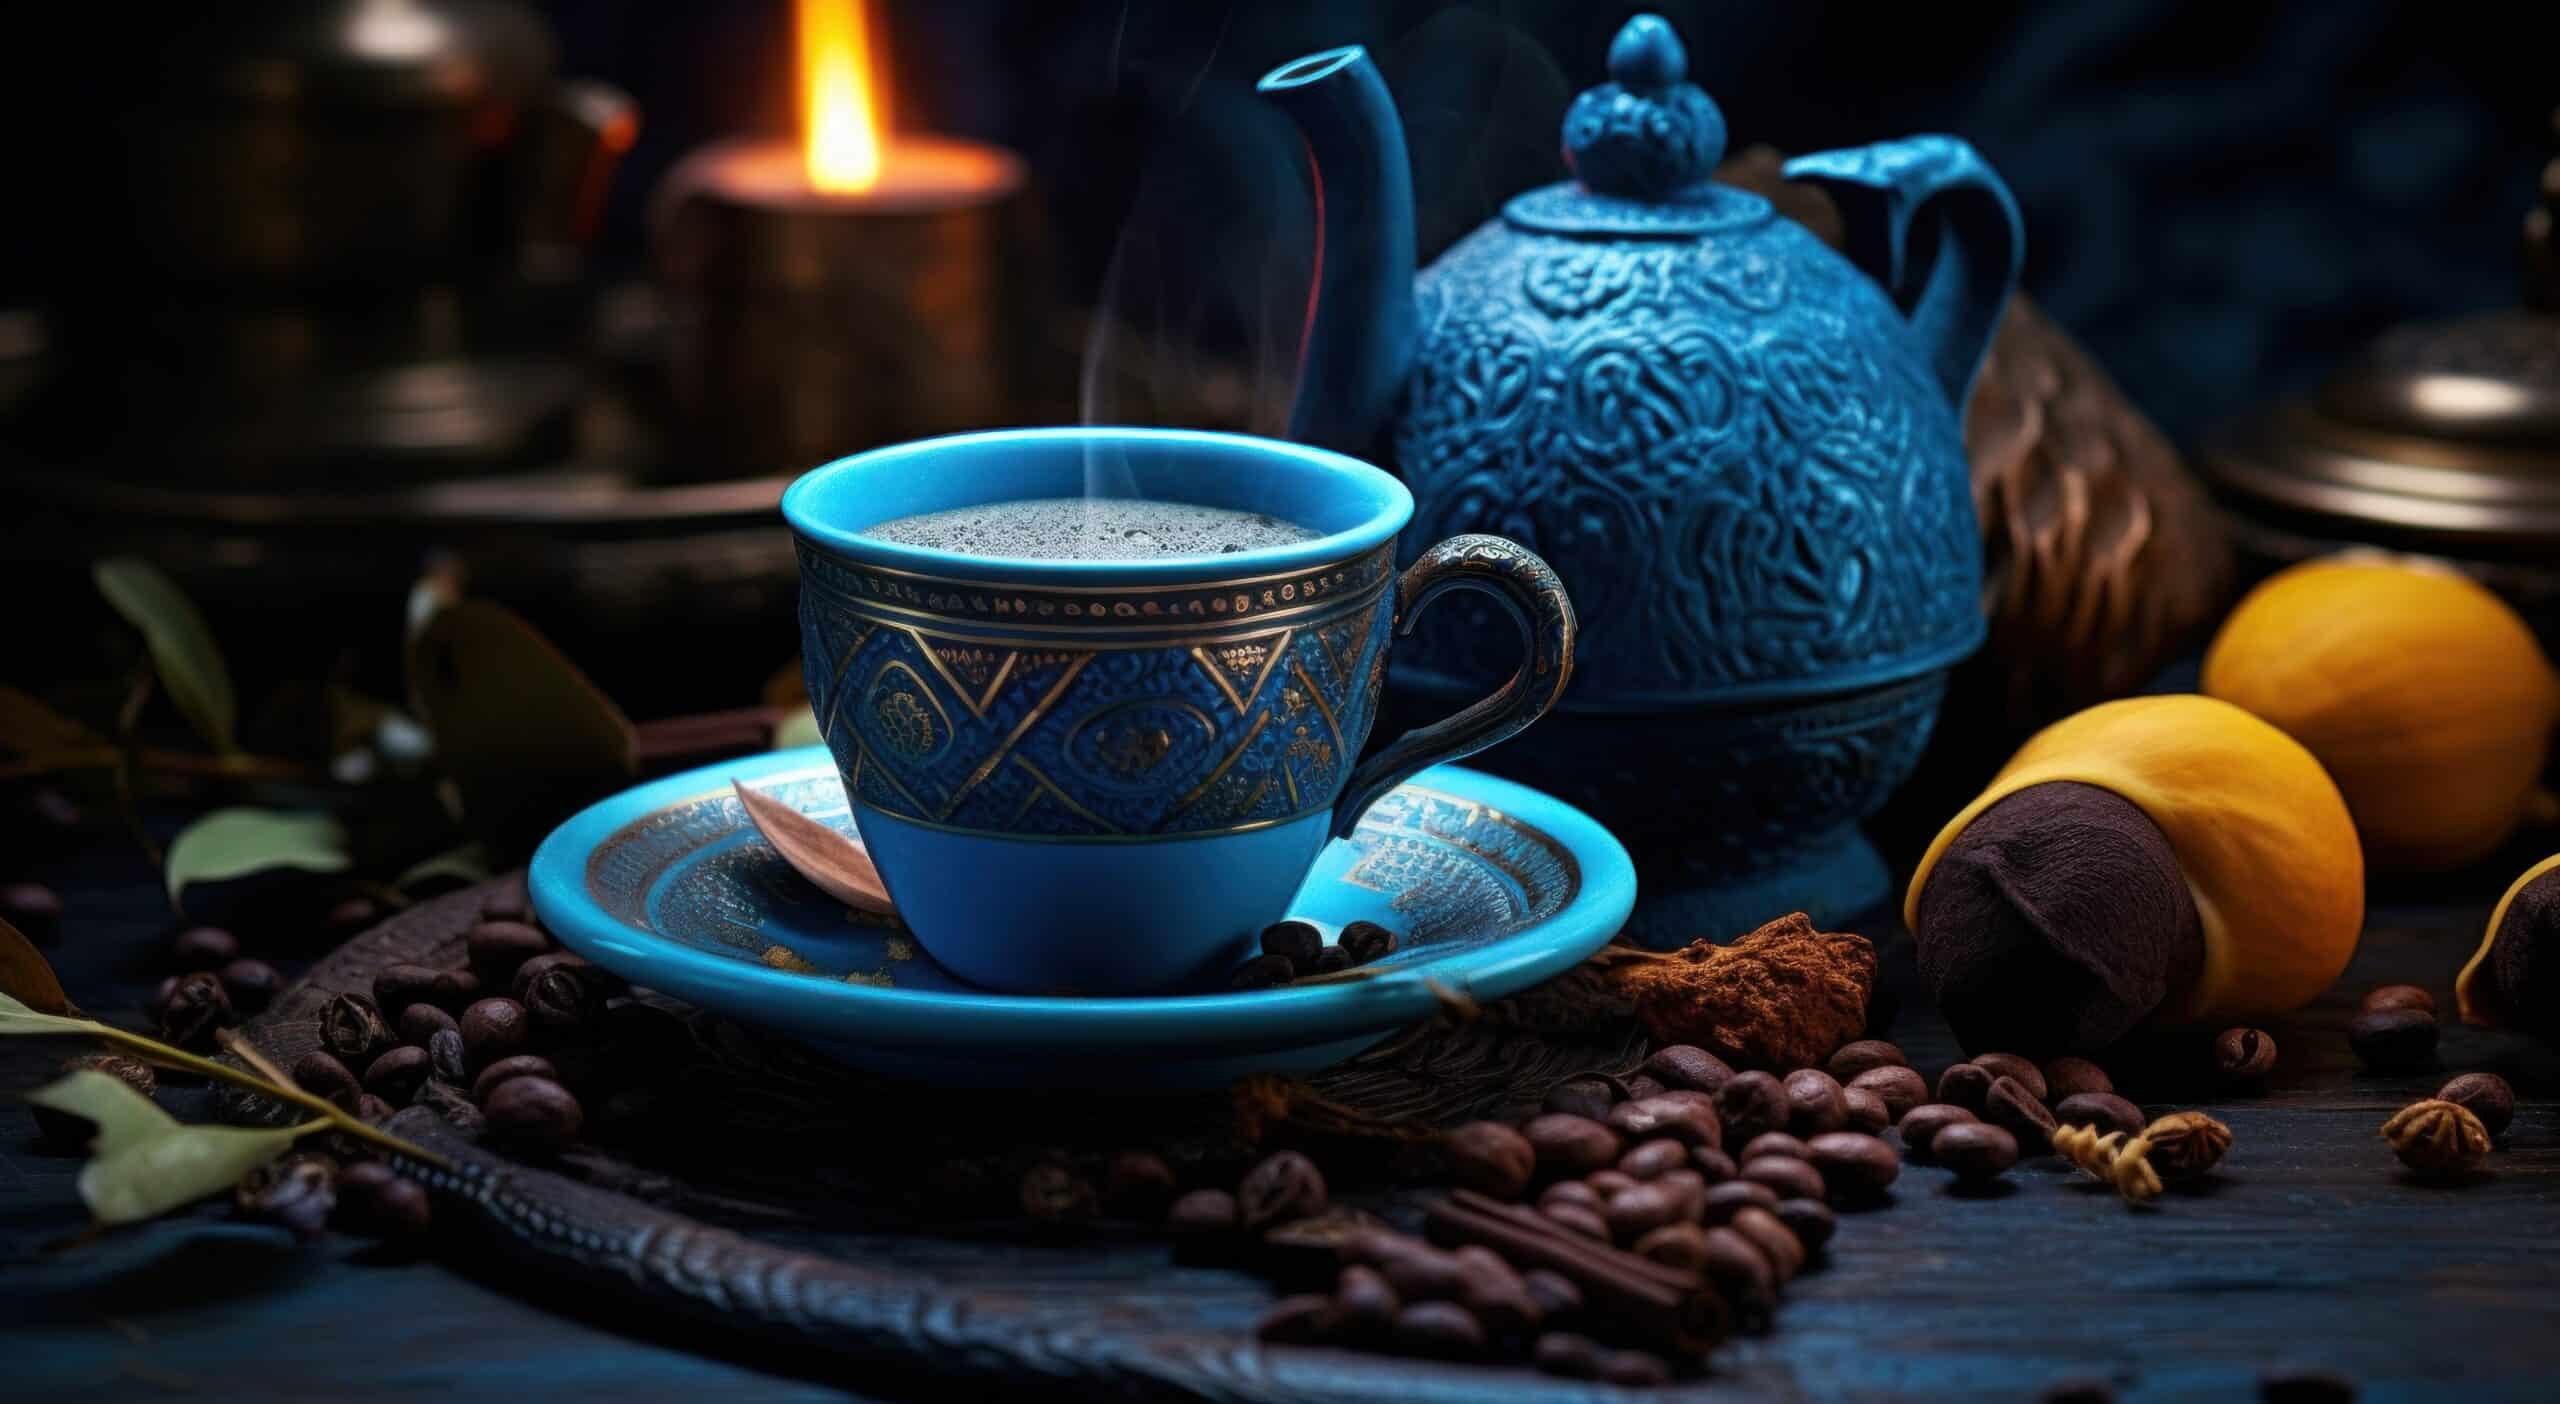 www.appr.com : Is Turkish Coffee Good?